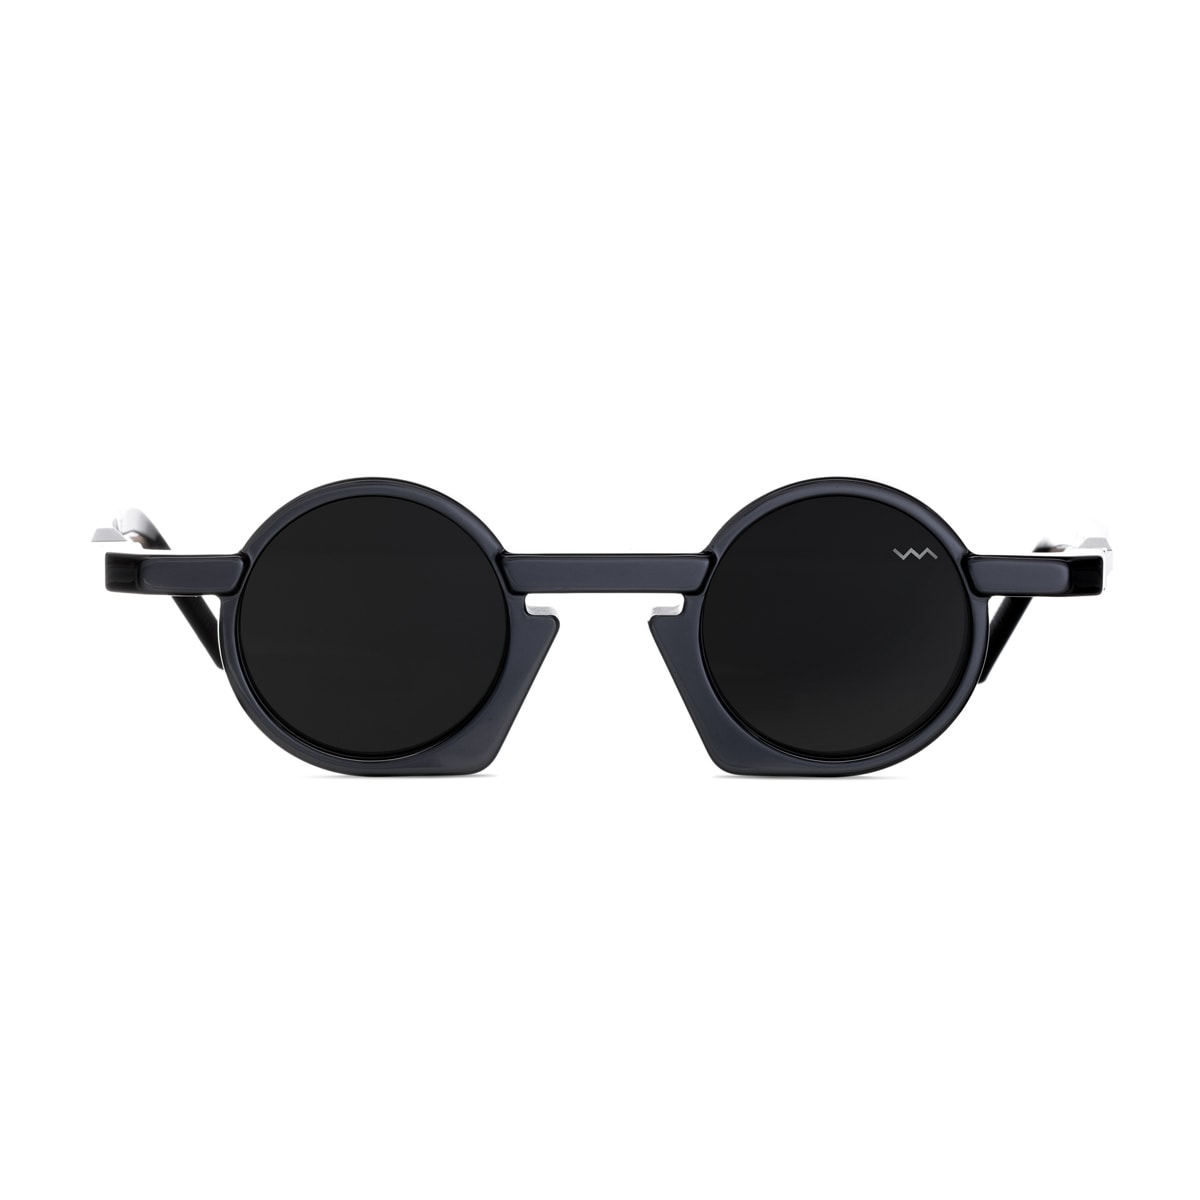 Bl0043 Black Label Black Sunglasses